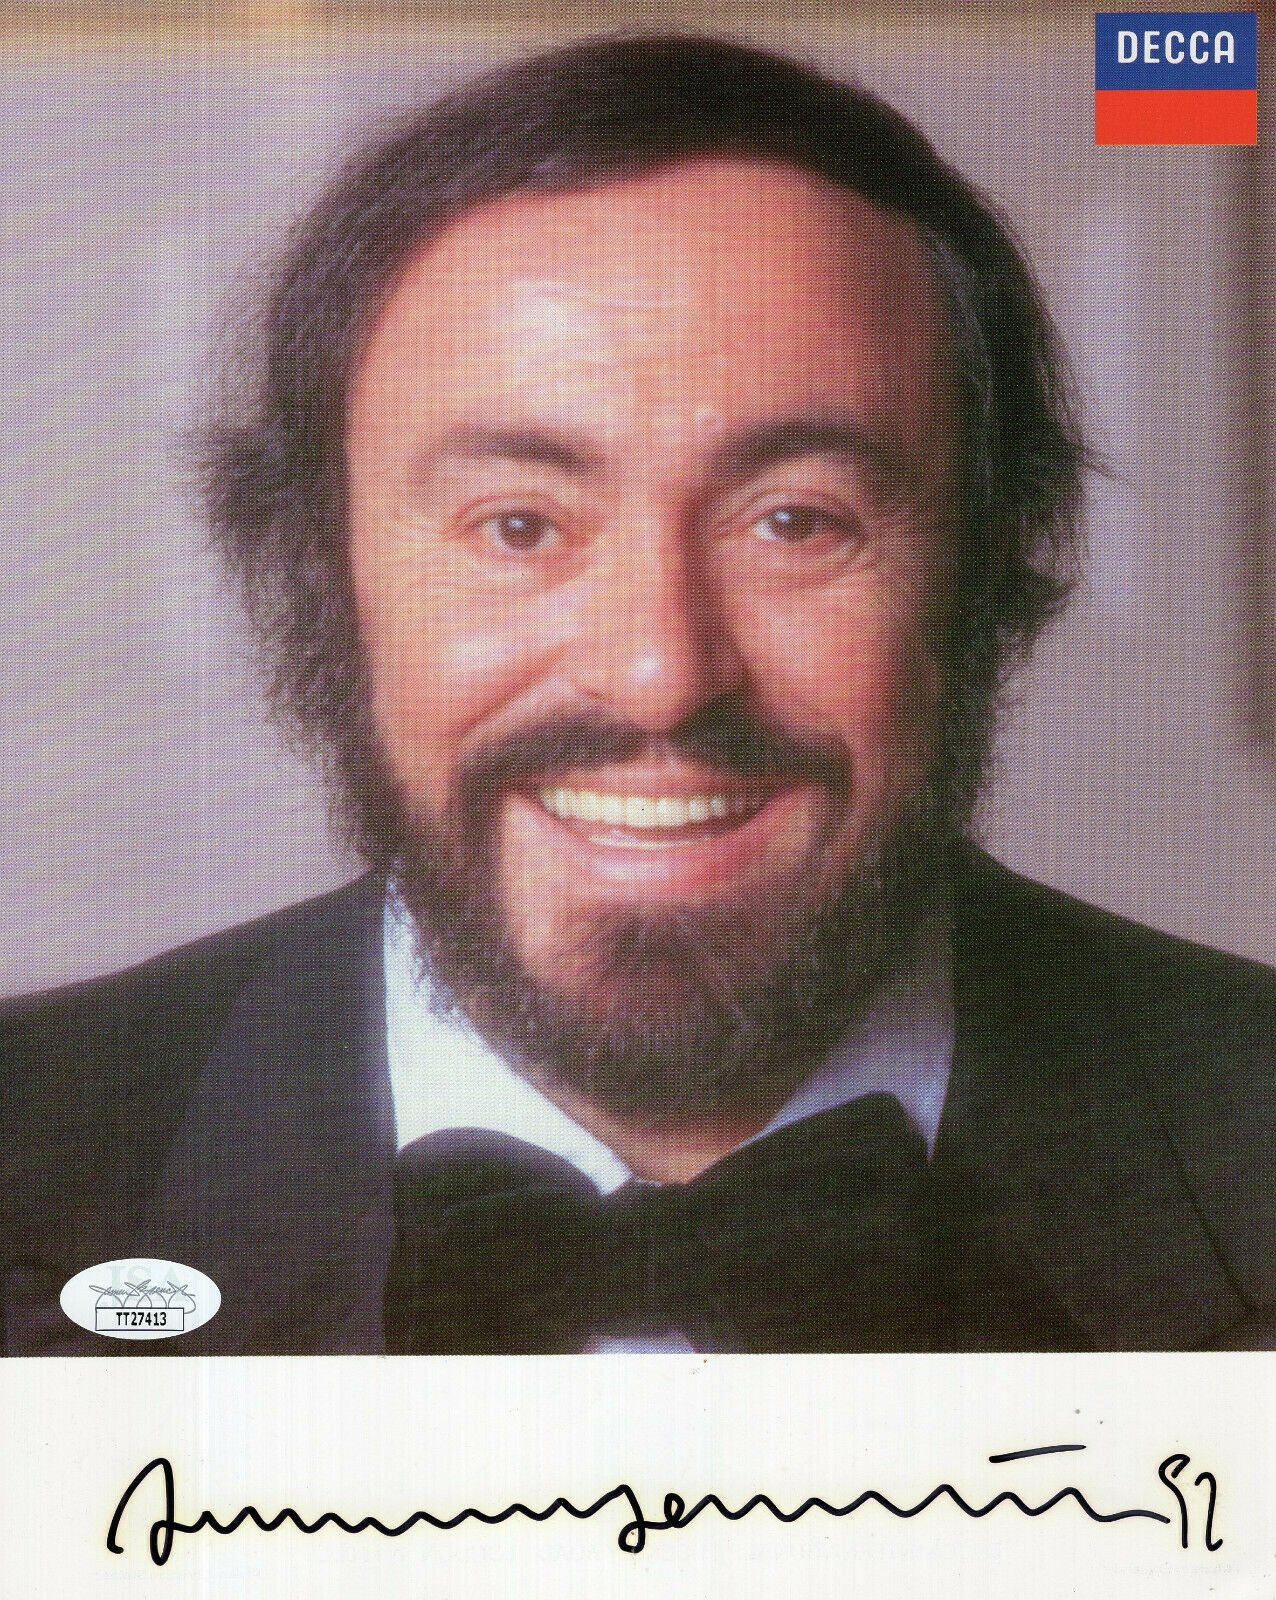 Luciano Pavarotti Hand Signed 8x10 Color Photo Legendary Three Tenor